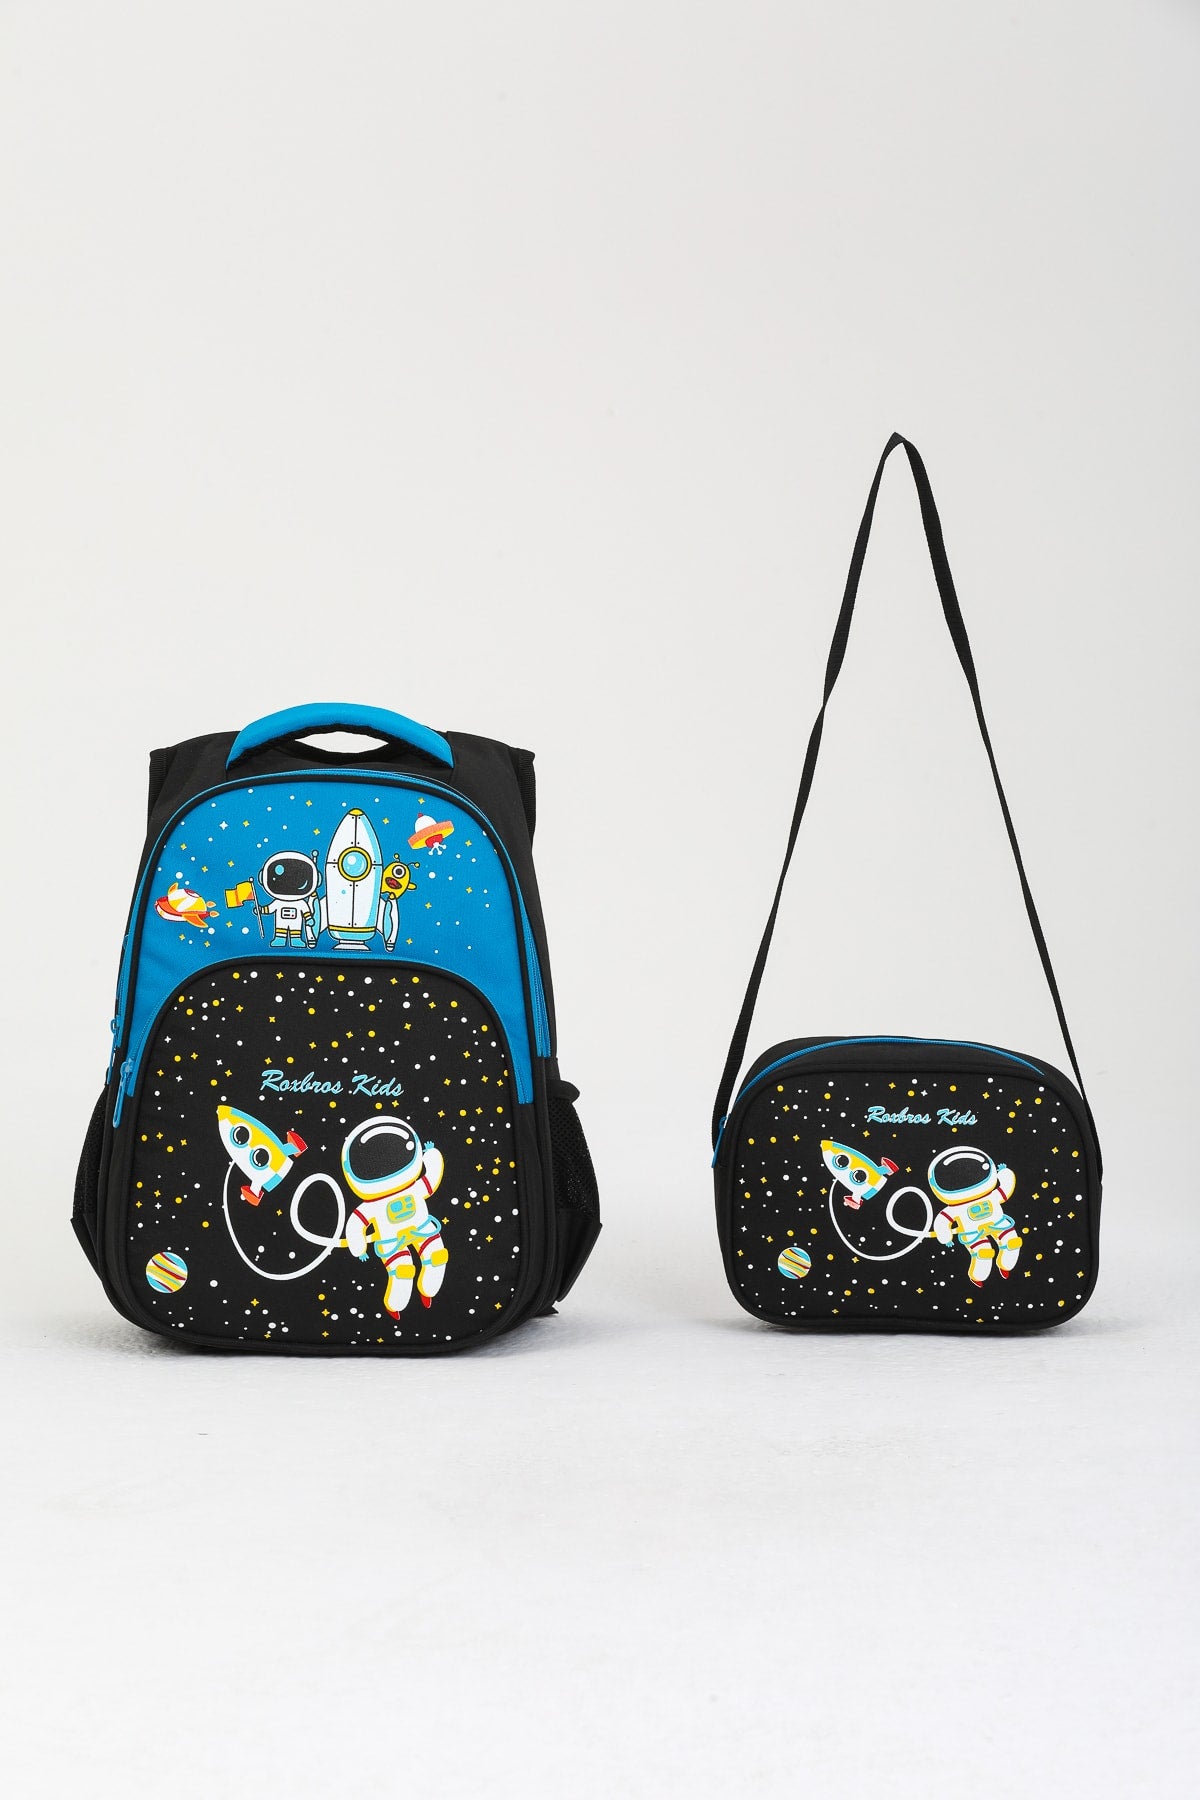 Astronaut Kids Space Primary School Bag Lunch Box Boys-girls